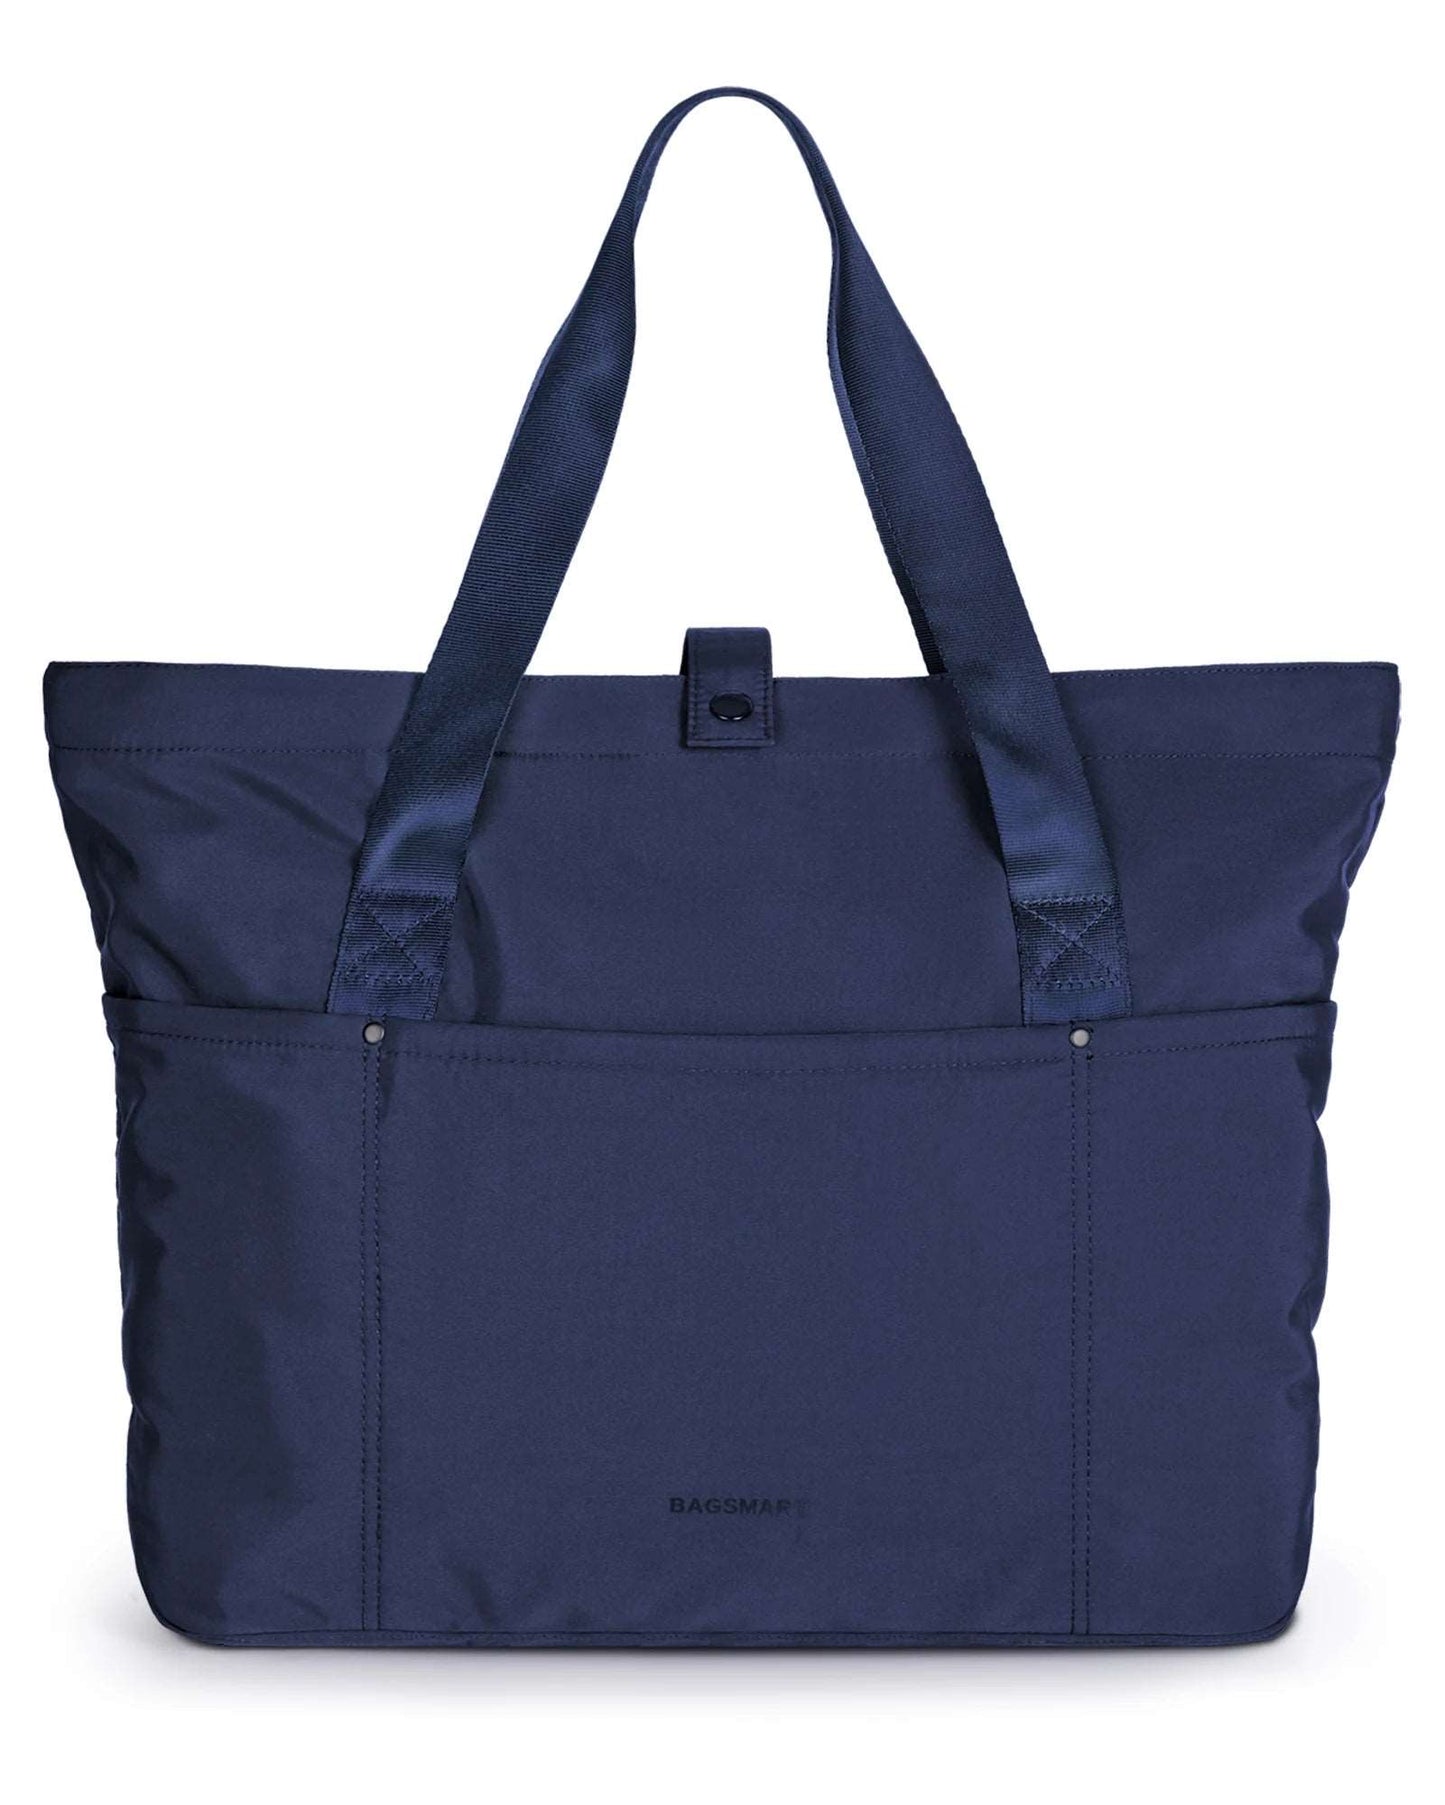 BAGSMART Tote Bag 20L Waterproof Folding Travel Bag With Zipper Deep blue